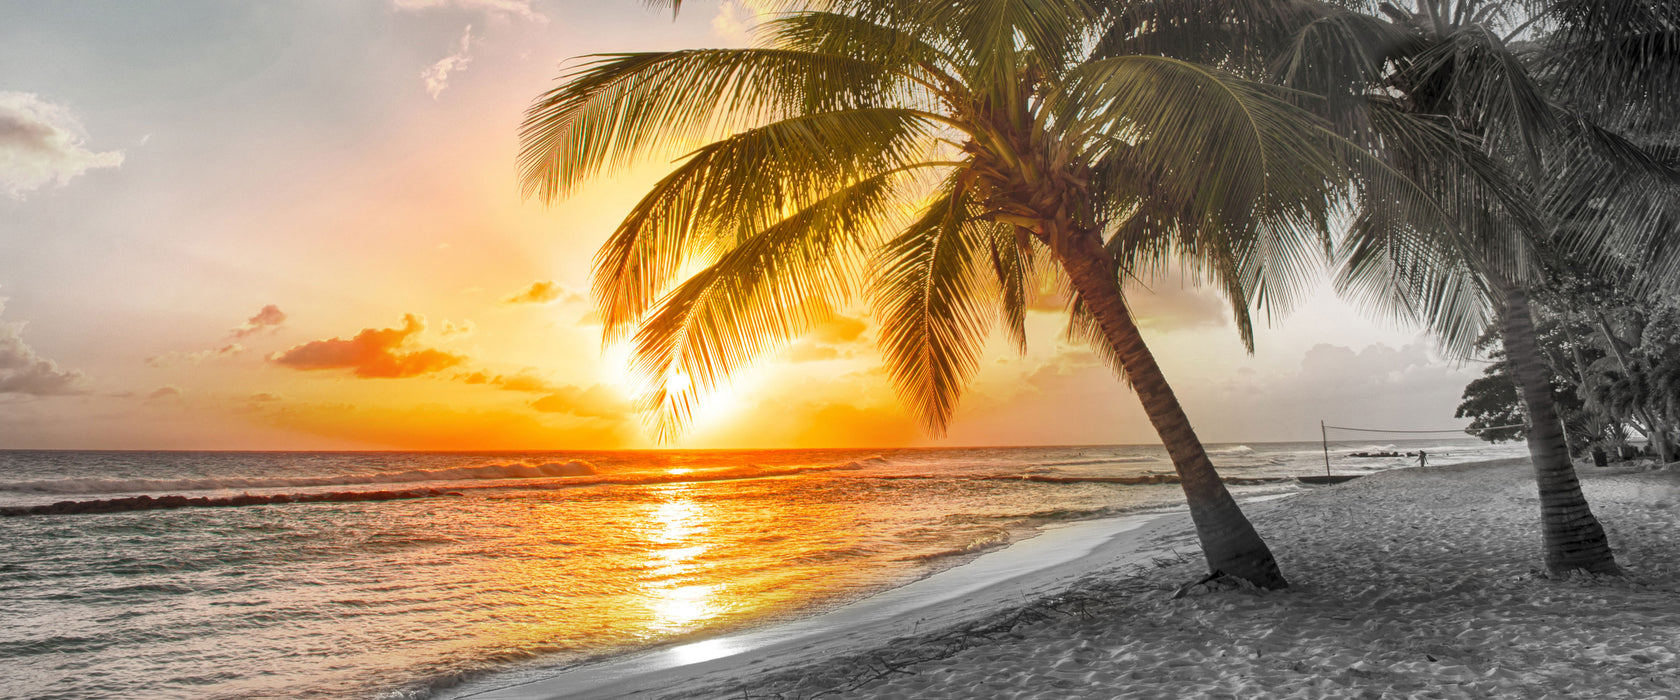 Palmen im Sonnenuntergang auf Barbados B&W Detail, Glasbild Panorama